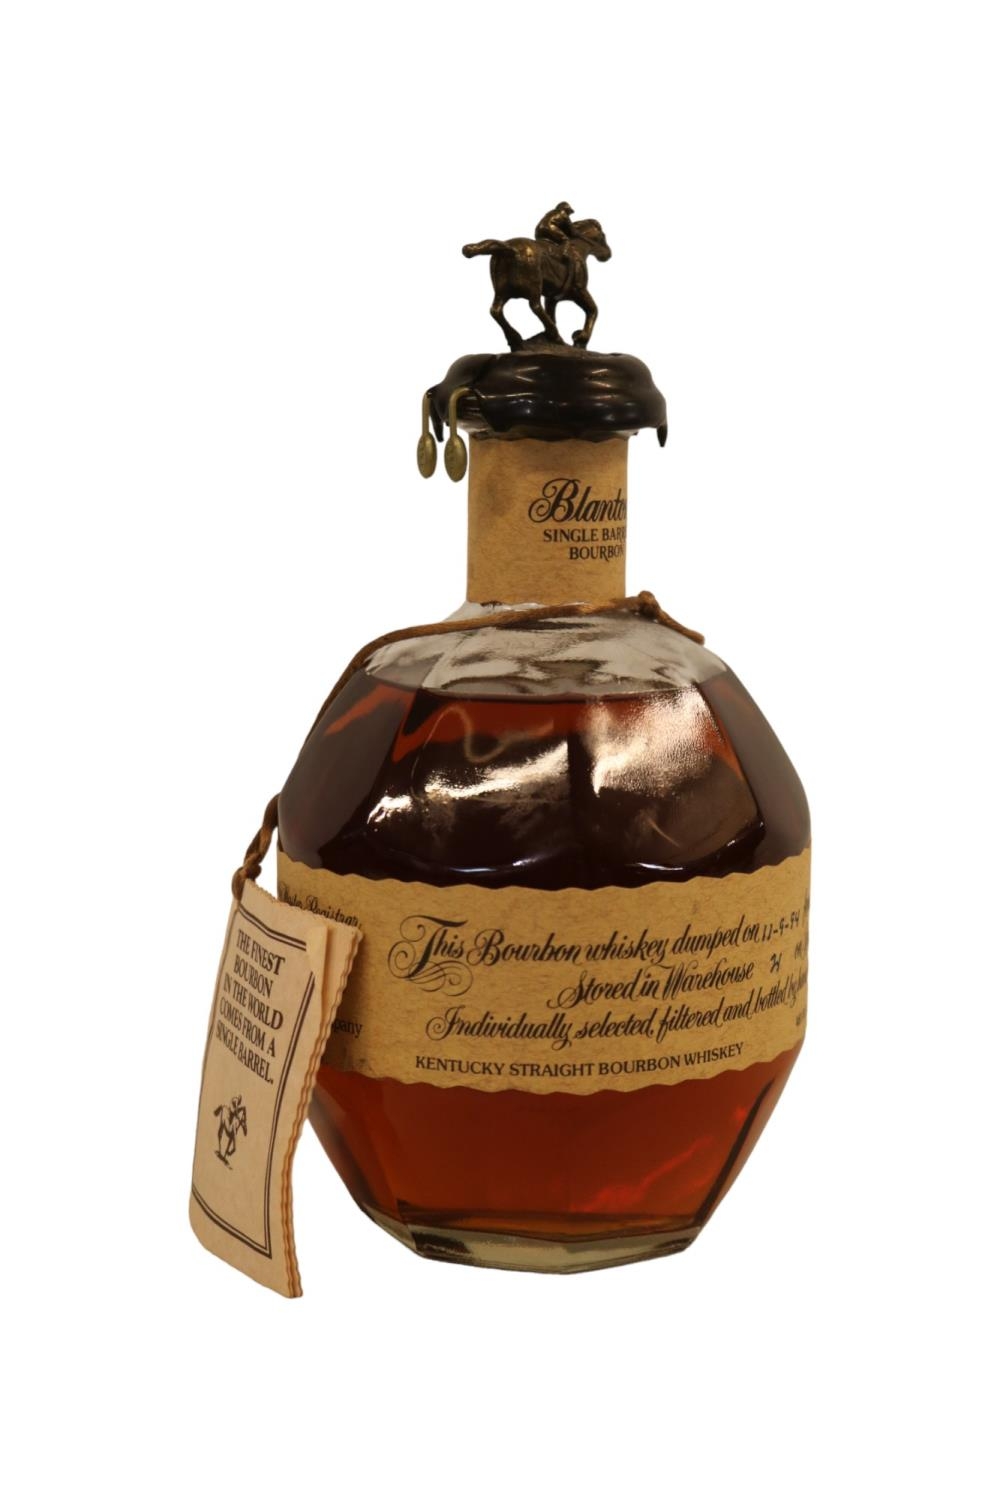 Blantons Single Barrel Bourbon Whiskey dated 11/09/94 Barrel No 209 Kentucky Straight Bourbon